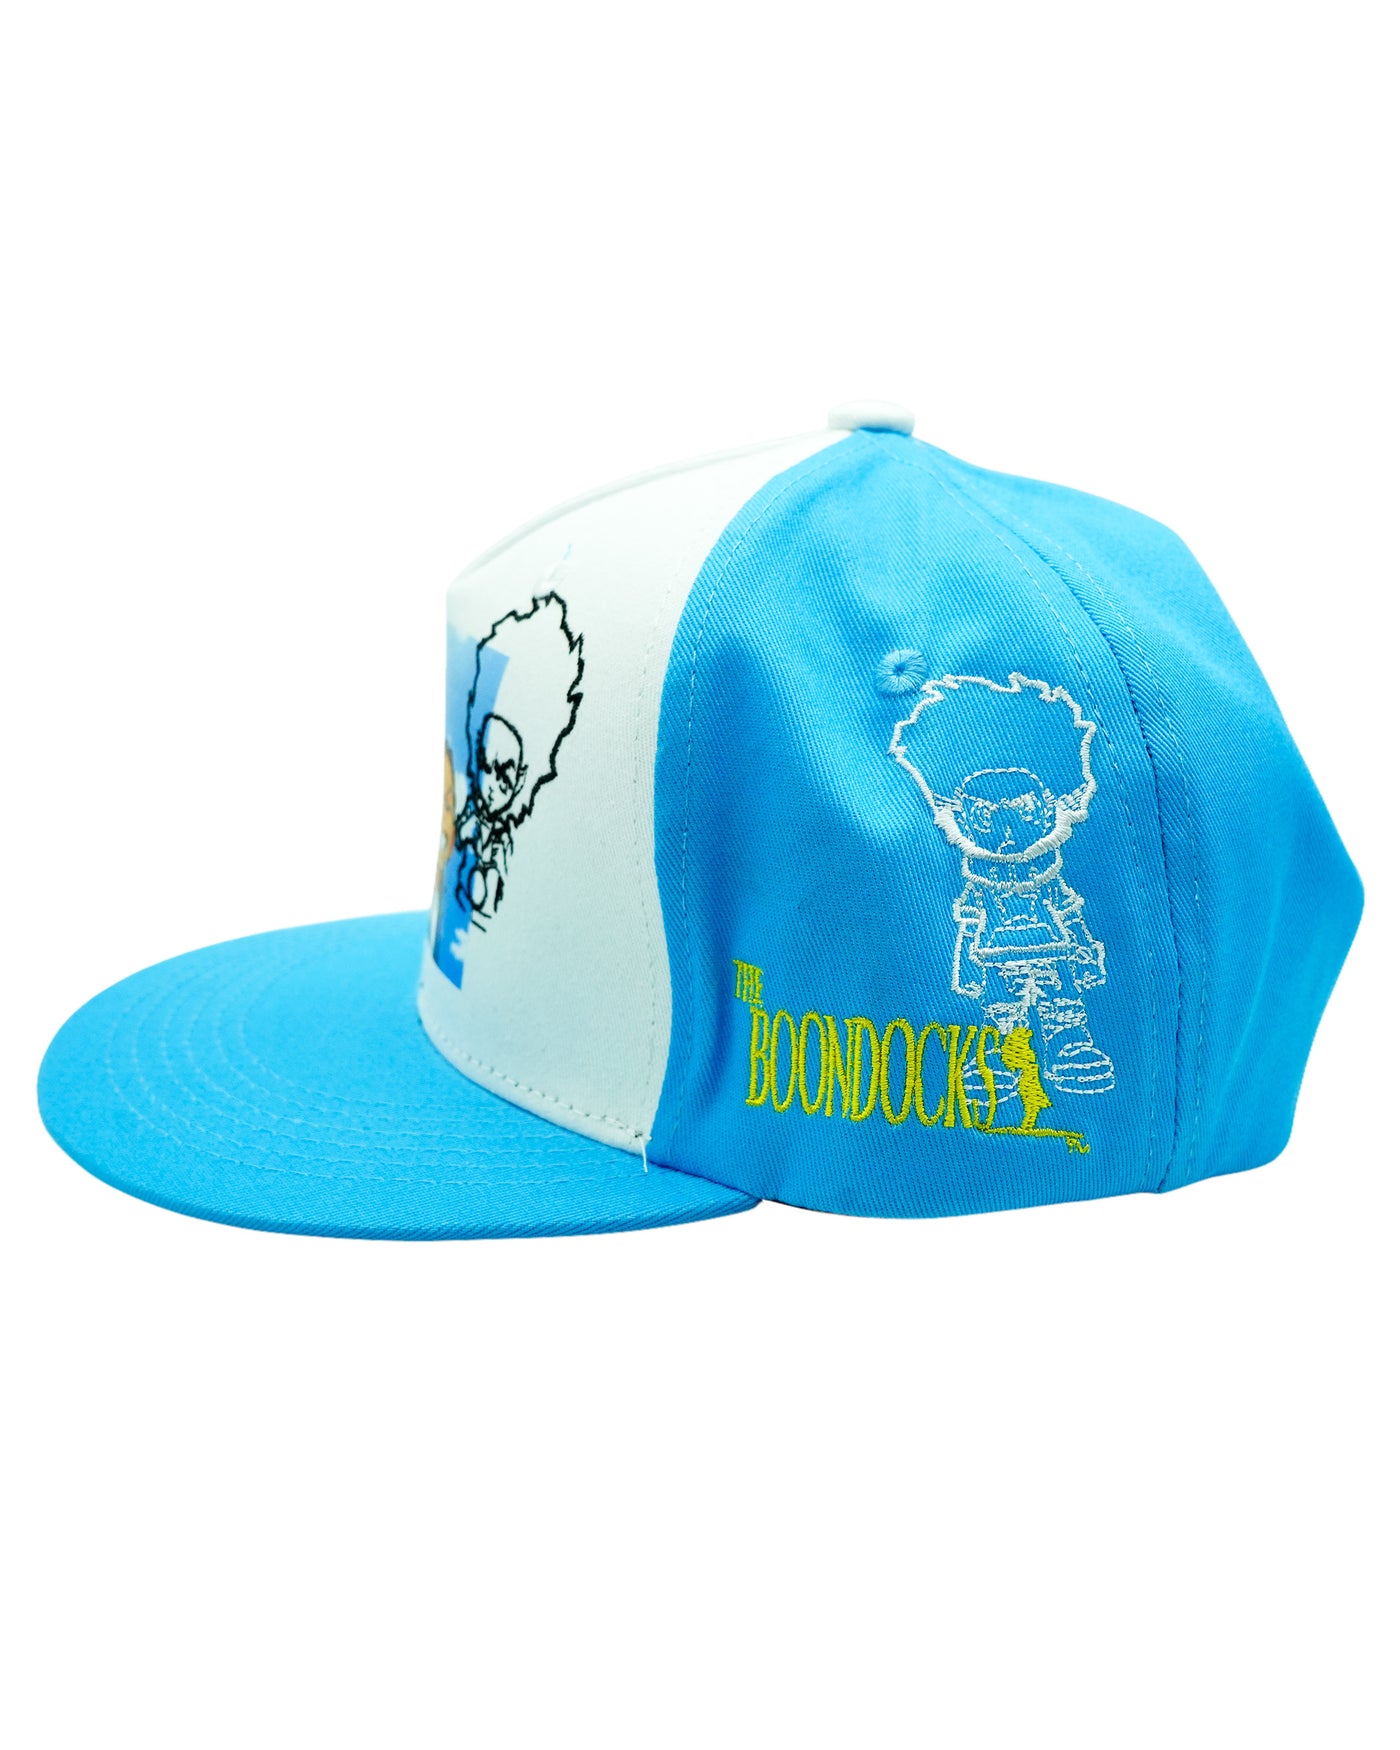 The Boondocks Gold Winners N.C Blue Snapback Hat